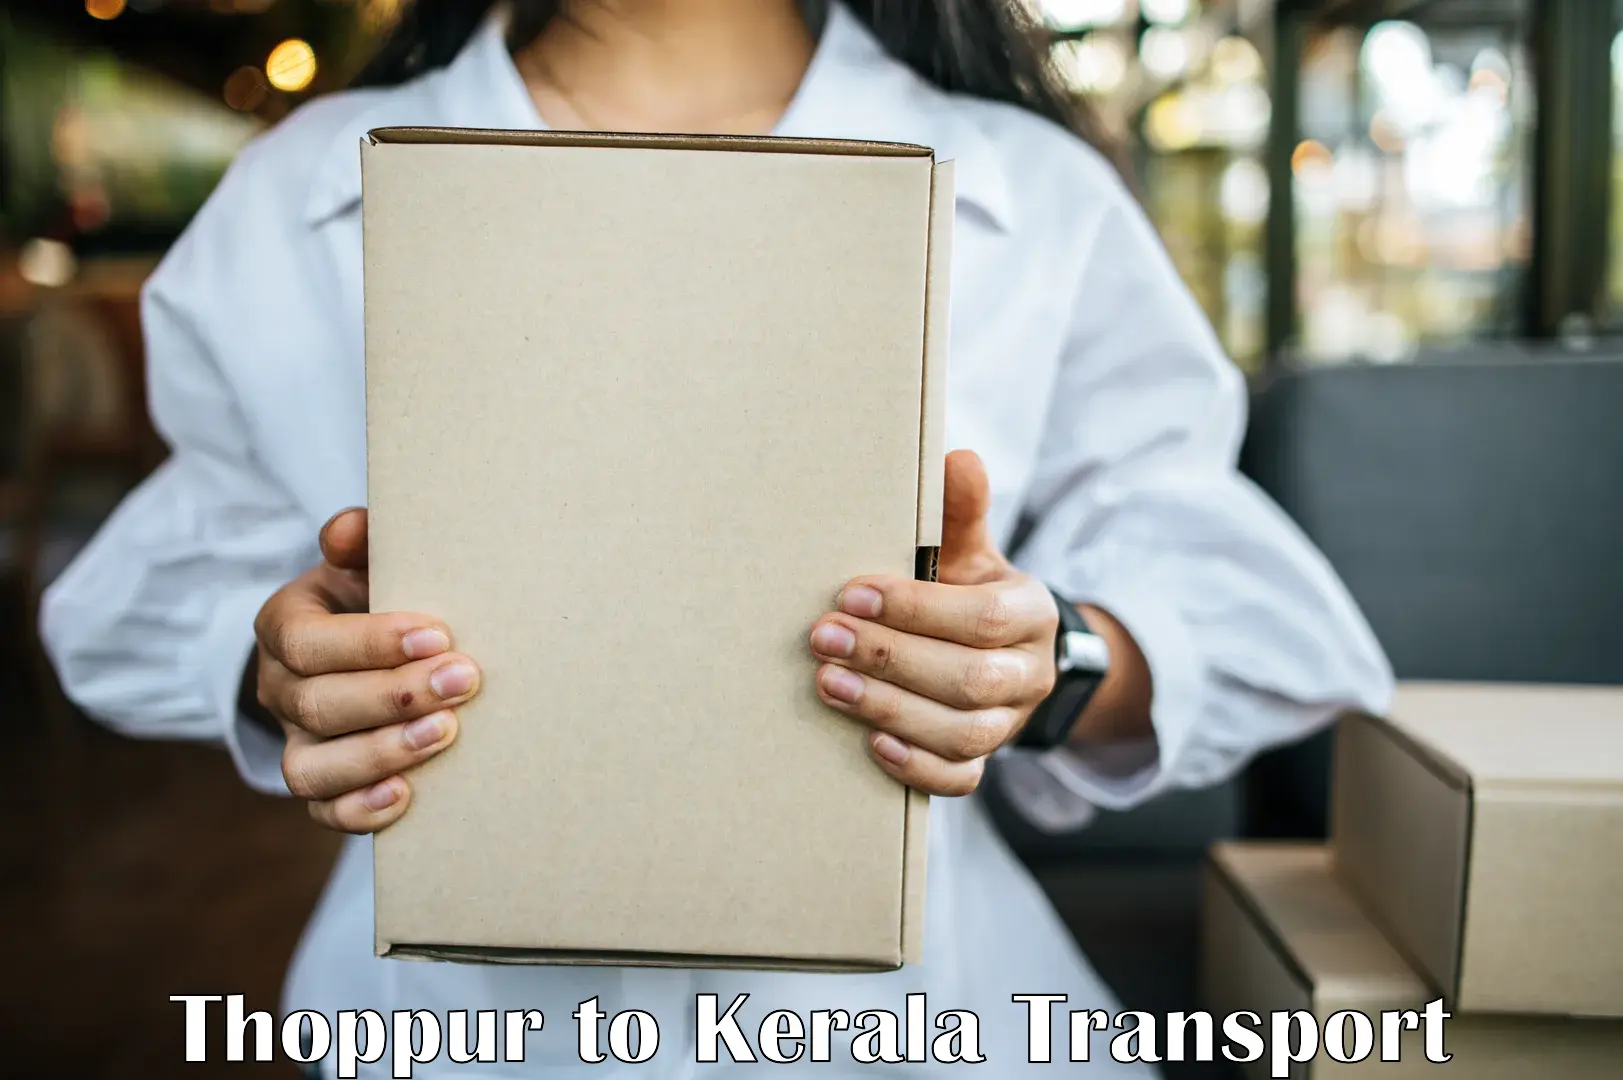 Online transport booking Thoppur to Kattappana